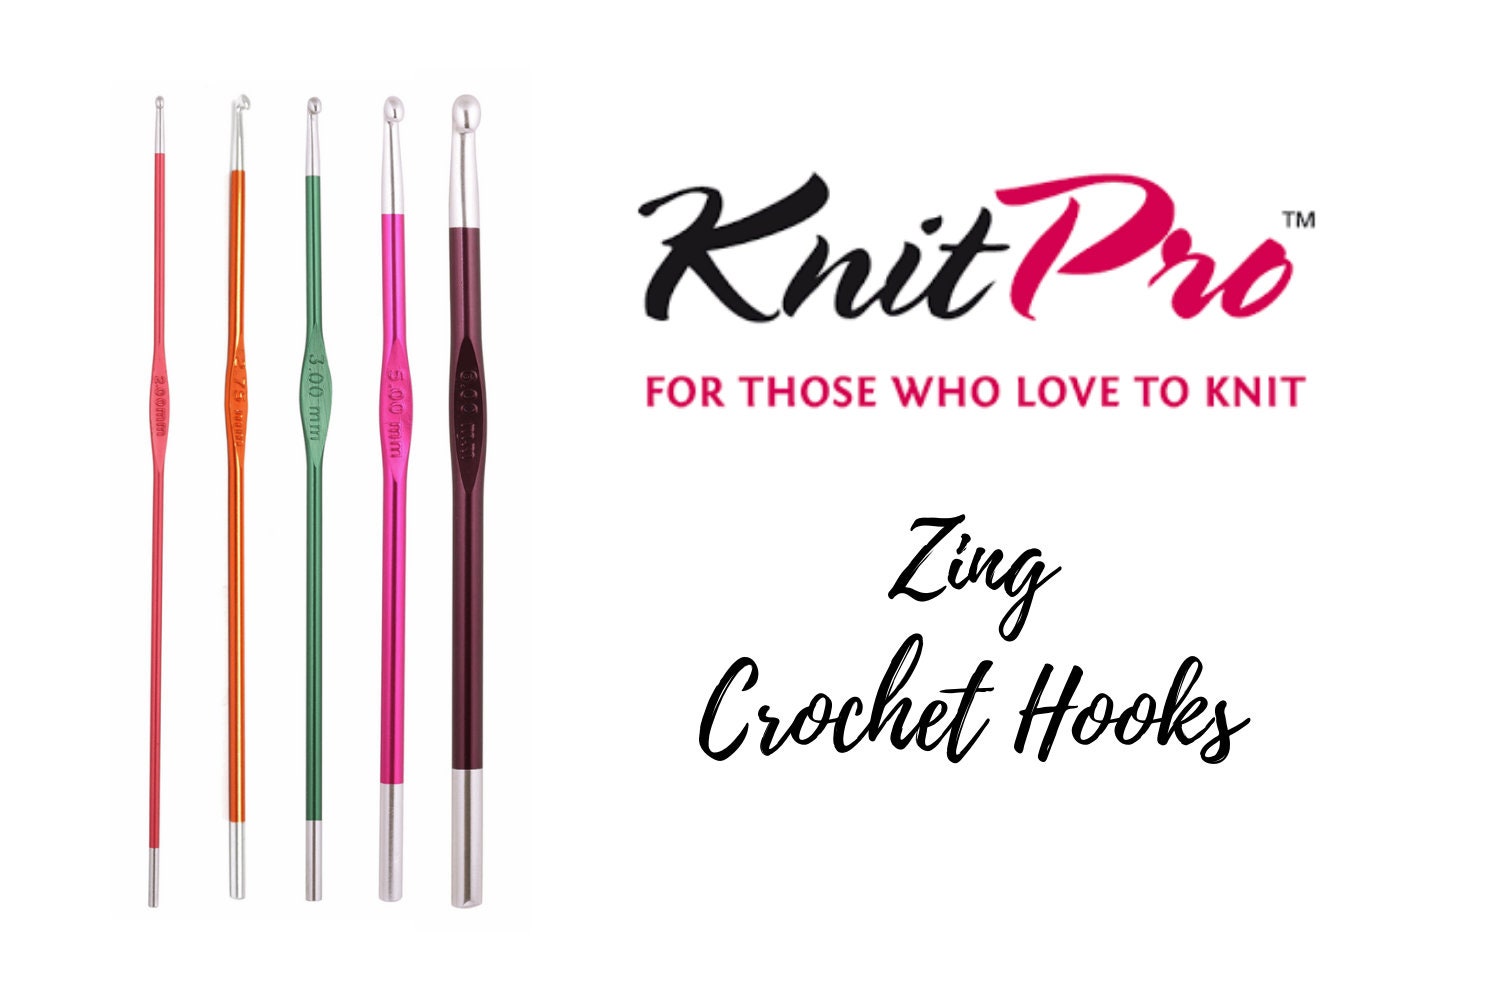 KnitPro Zing Single Pointed Crochet Hooks - All Sizes 2mm - 6mm